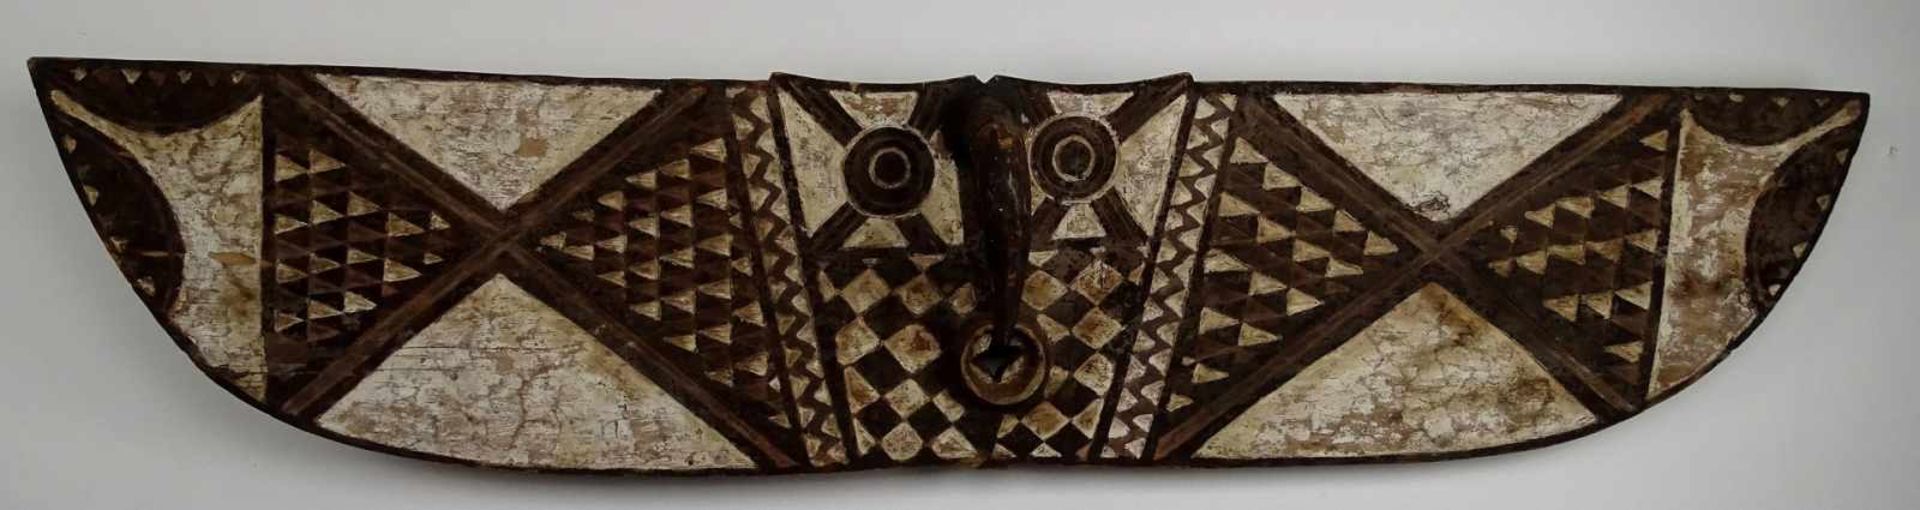 Afrikanische Schmetterlingsmaske, Burkina Fasoum 1950, Holz patiniert, altersgemäß guter Zustand, 50